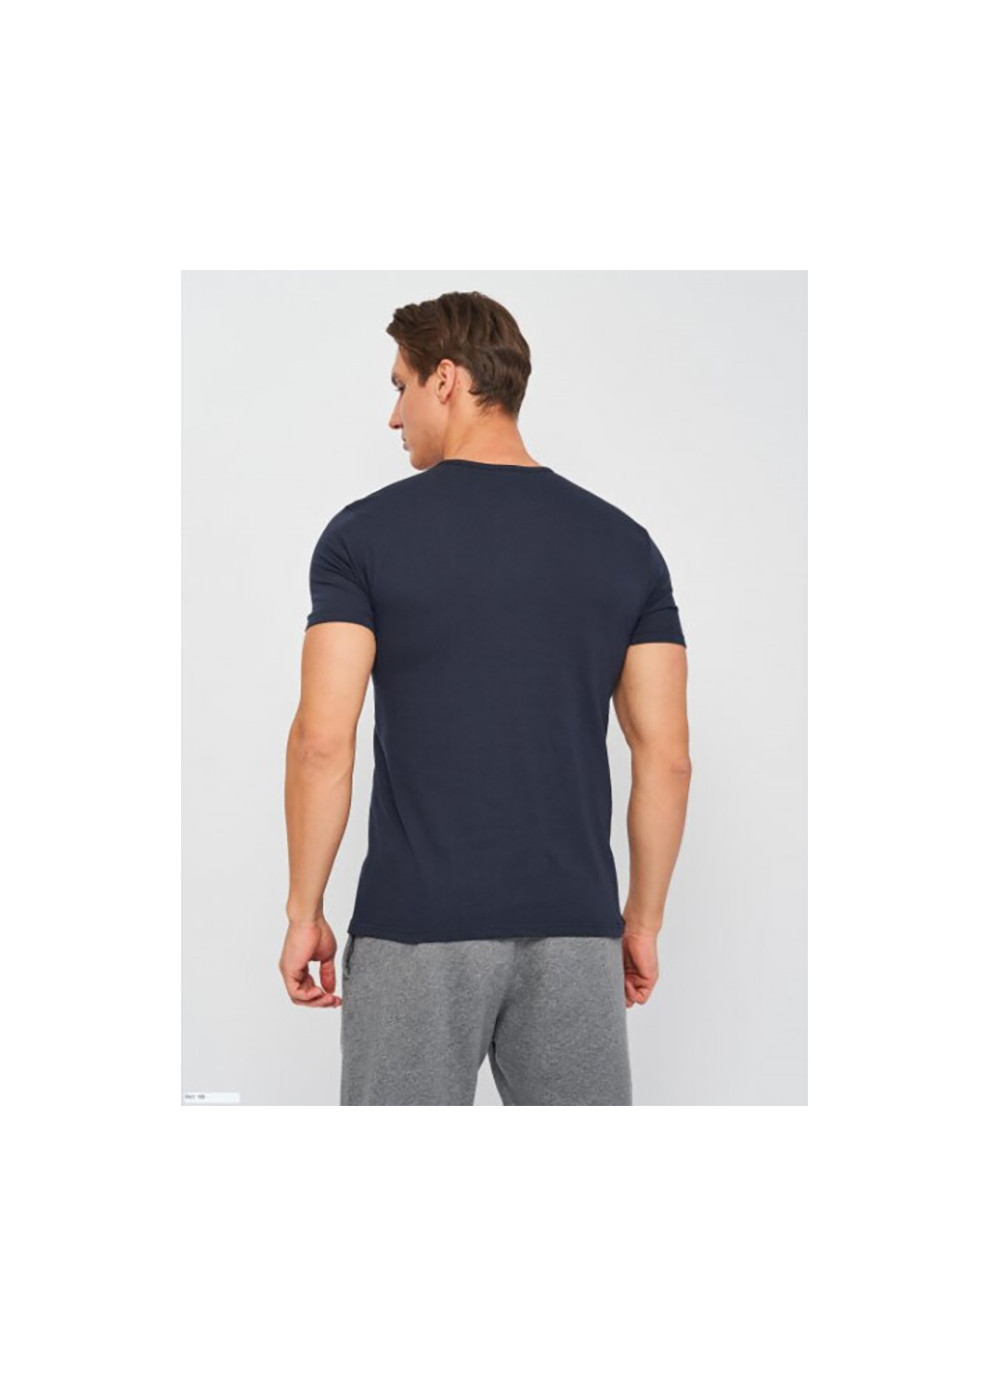 Темно-синяя футболка t-shirt mezza manica girocollo con stampa logo petto темно-синий xl муж k1335 blunavy-xl Kappa